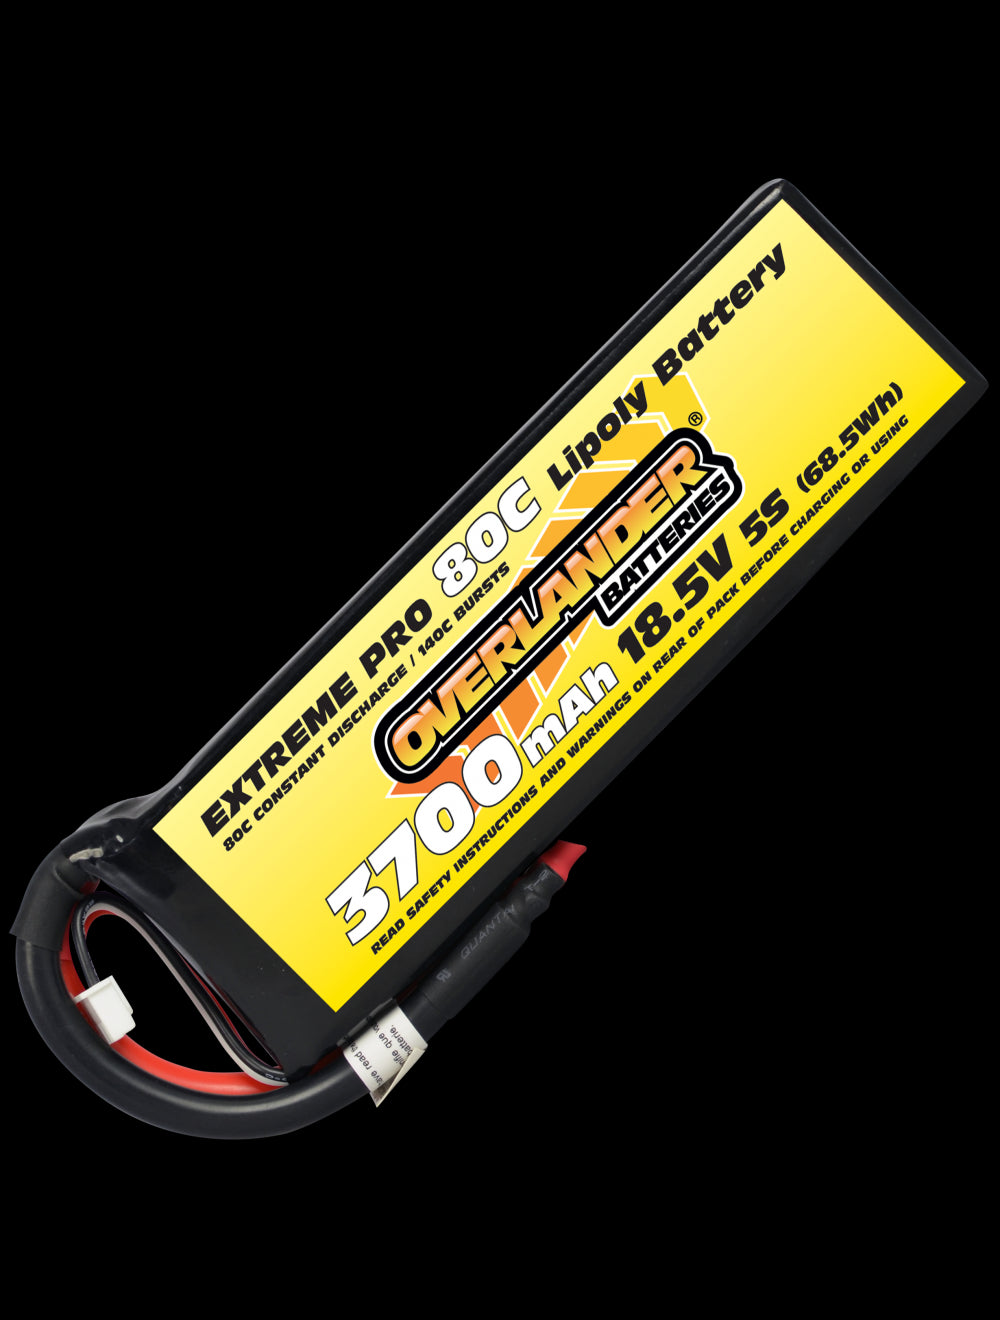 Overlander 3700mAh 18.5V 5S 80C Extreme Pro LiPo Battery - EC5 Connector 3108